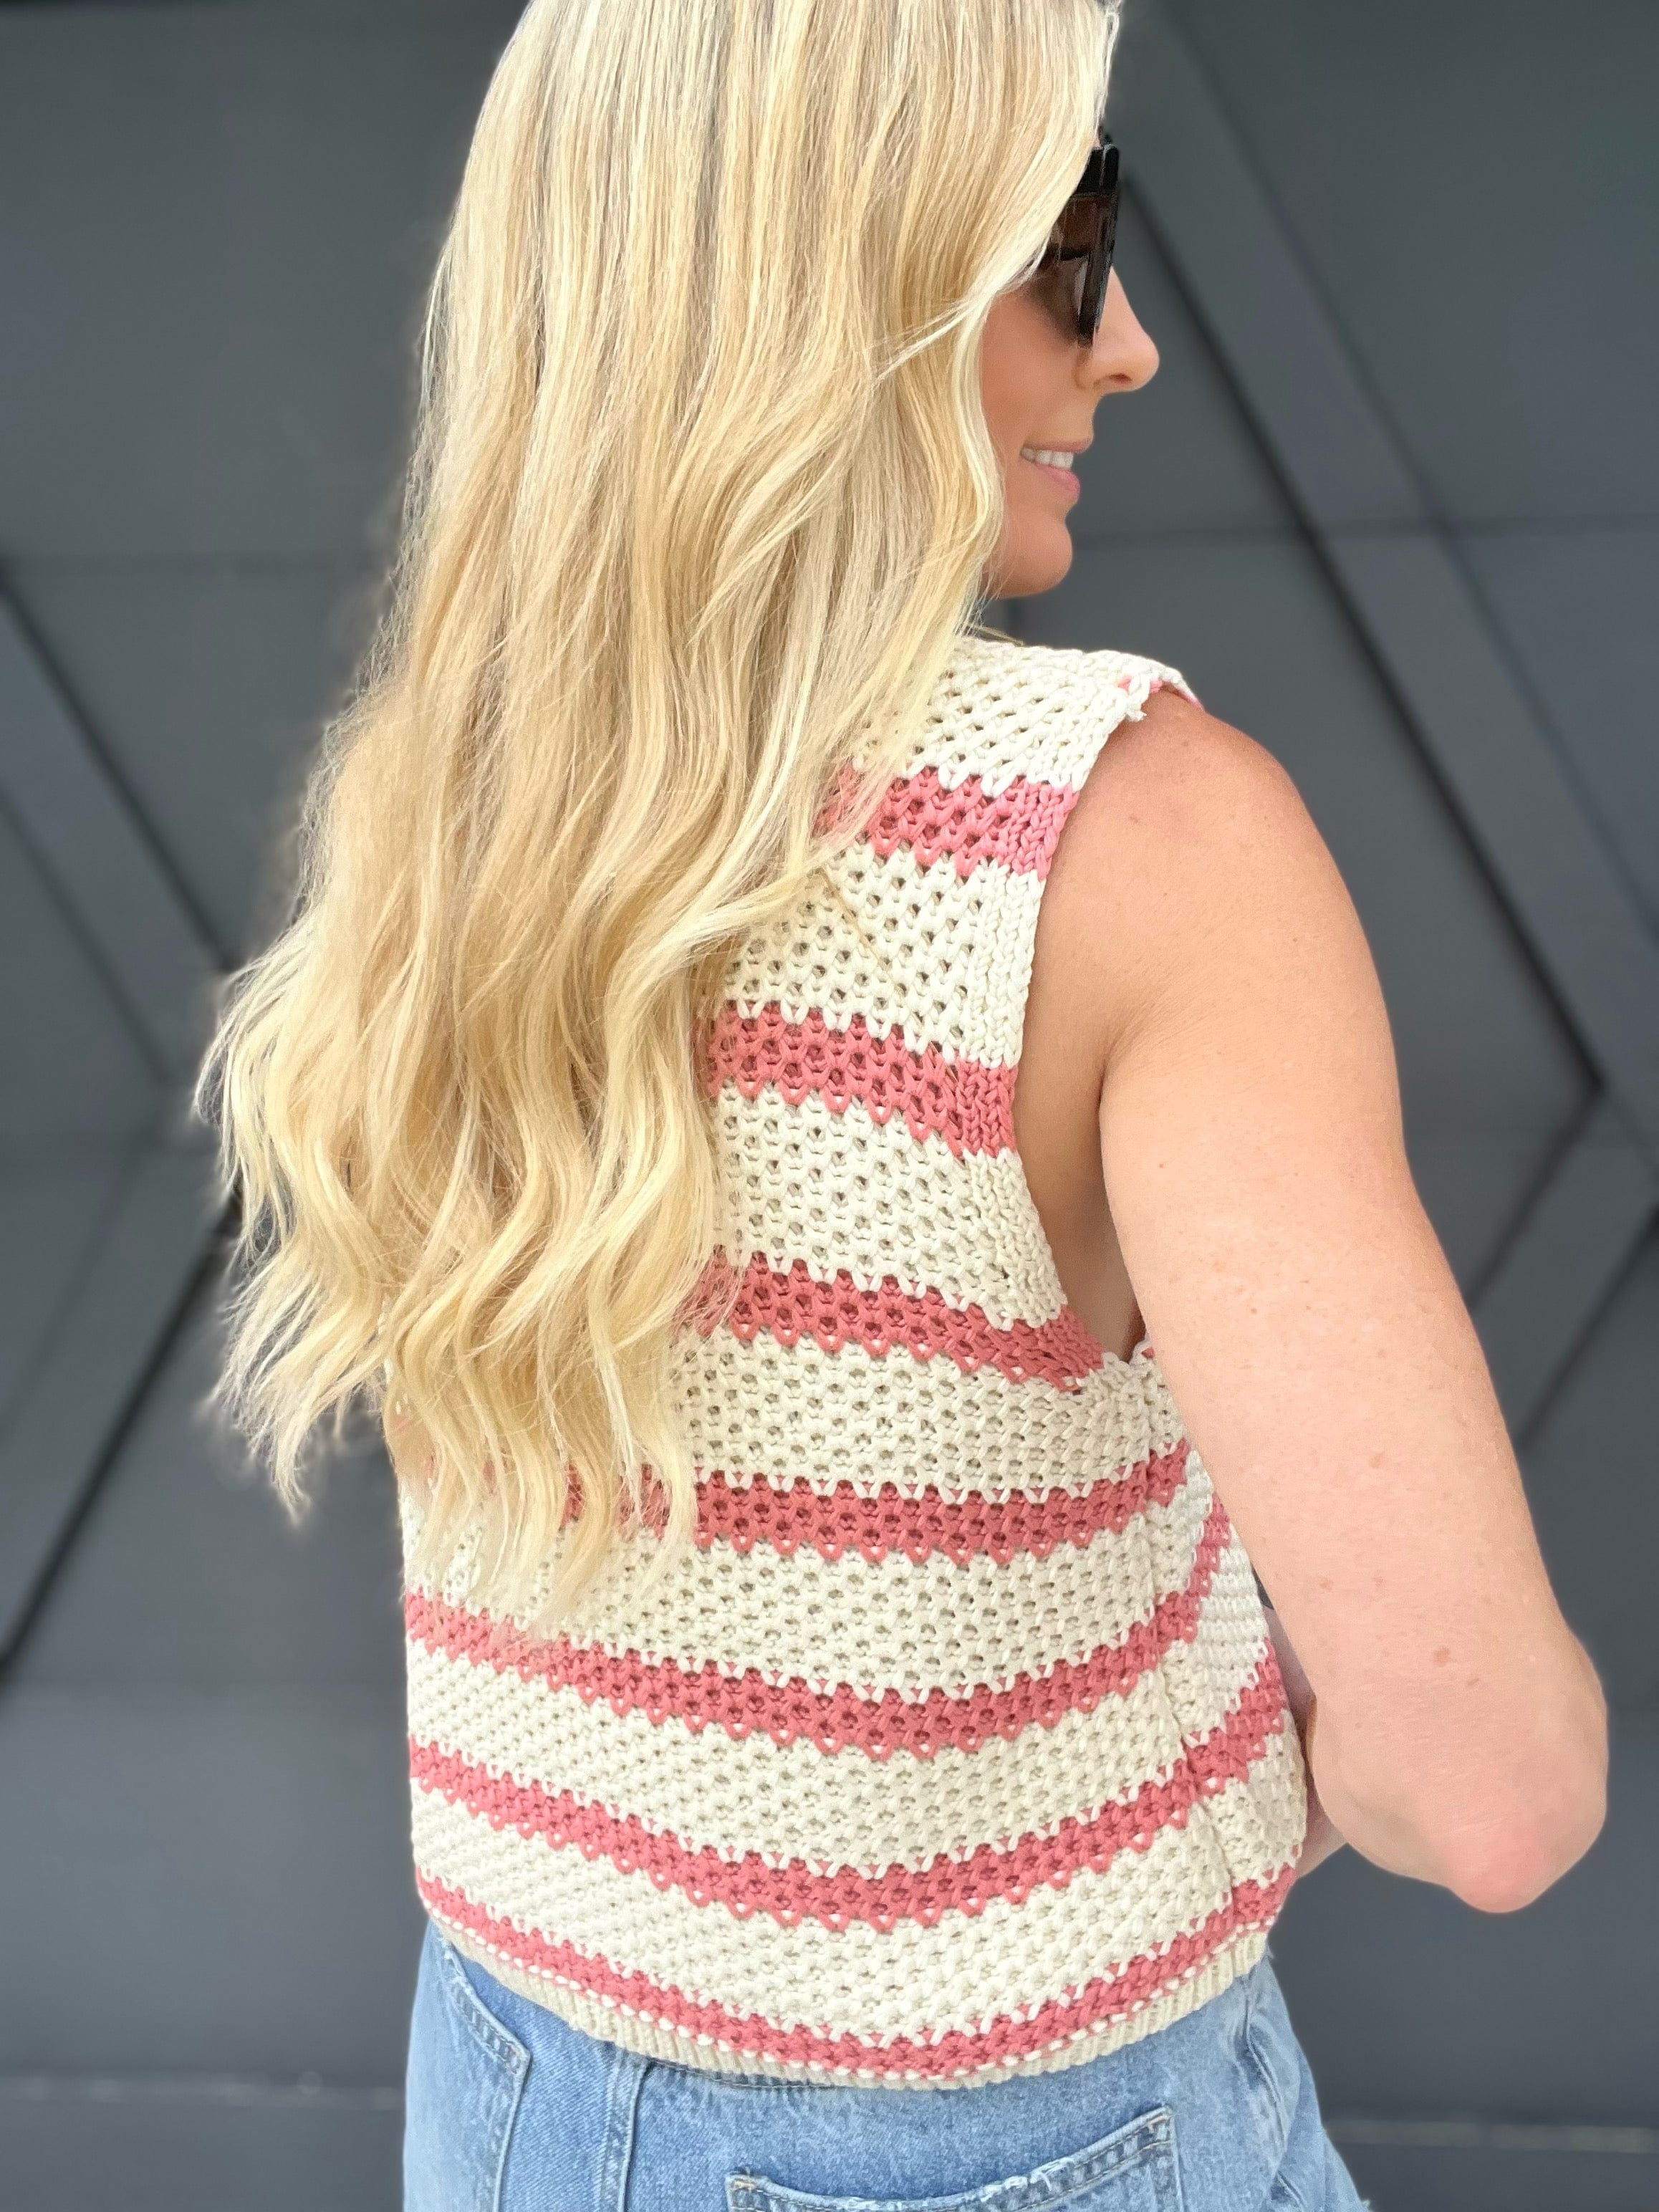 Chunky Stripe Spring Sweater Top In Strawberry Milk - Infinity Raine